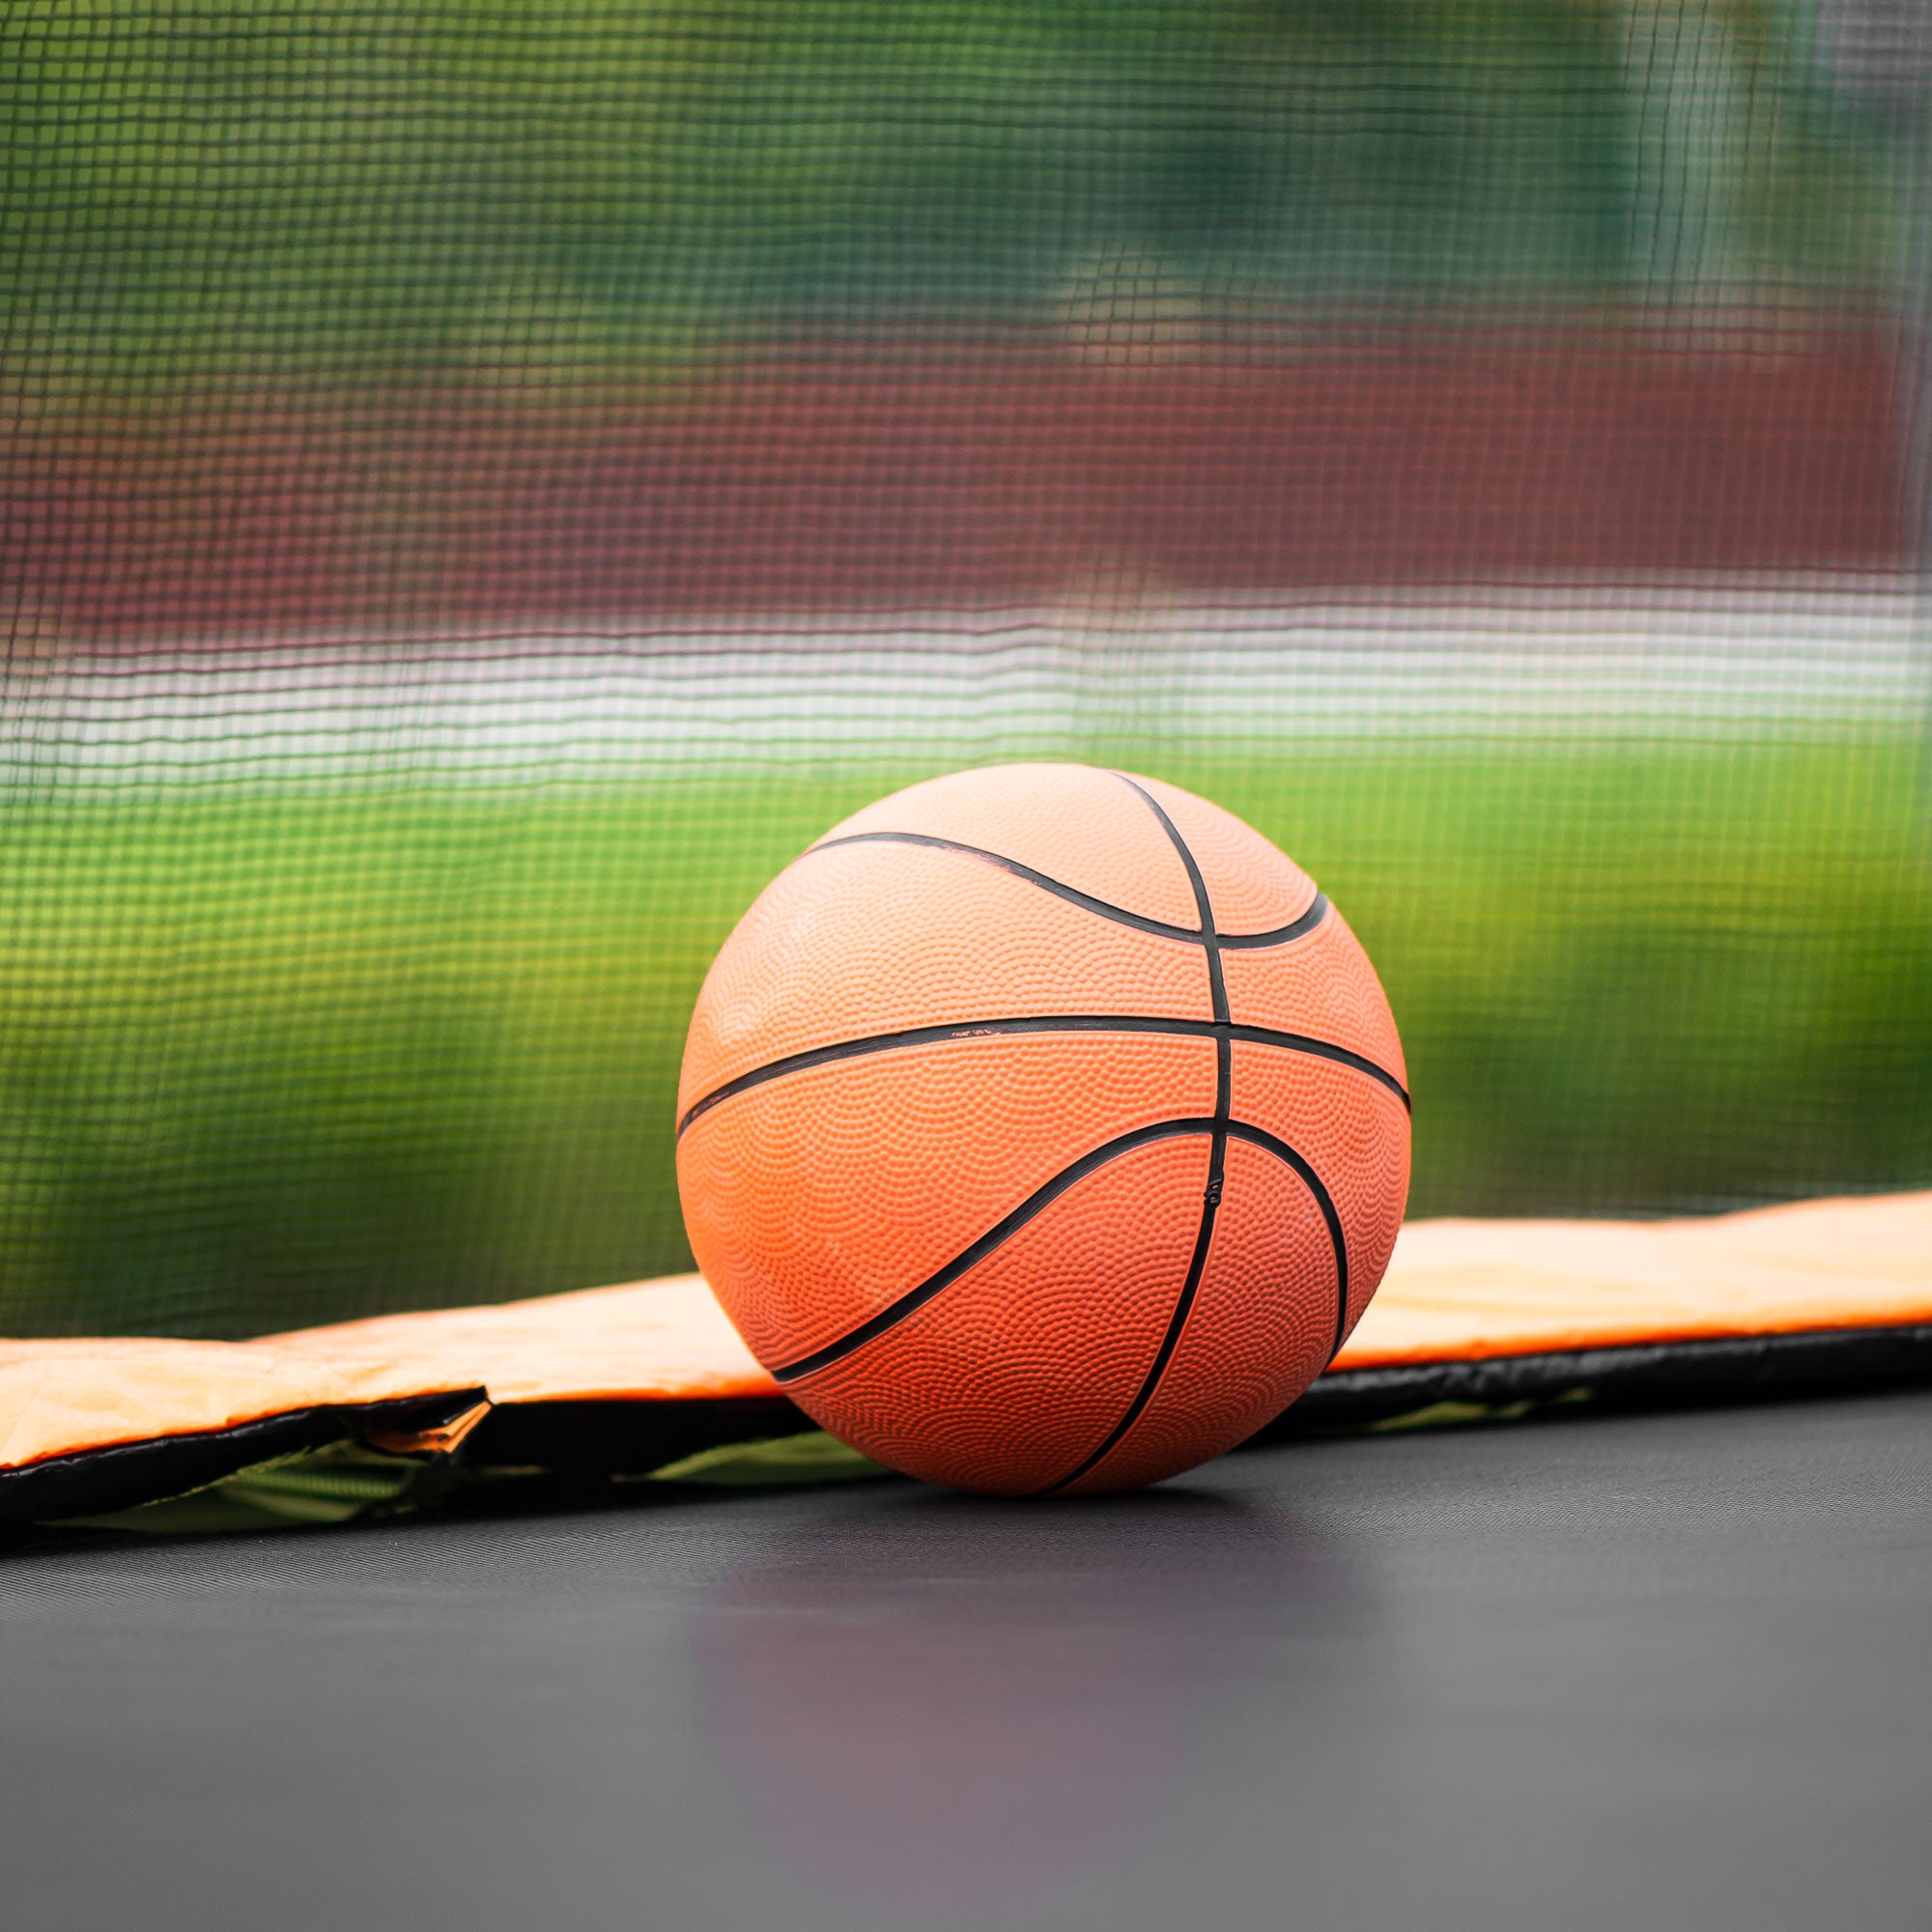 10FT Trampoline with Basketball Hoop Inflator and orange-metal